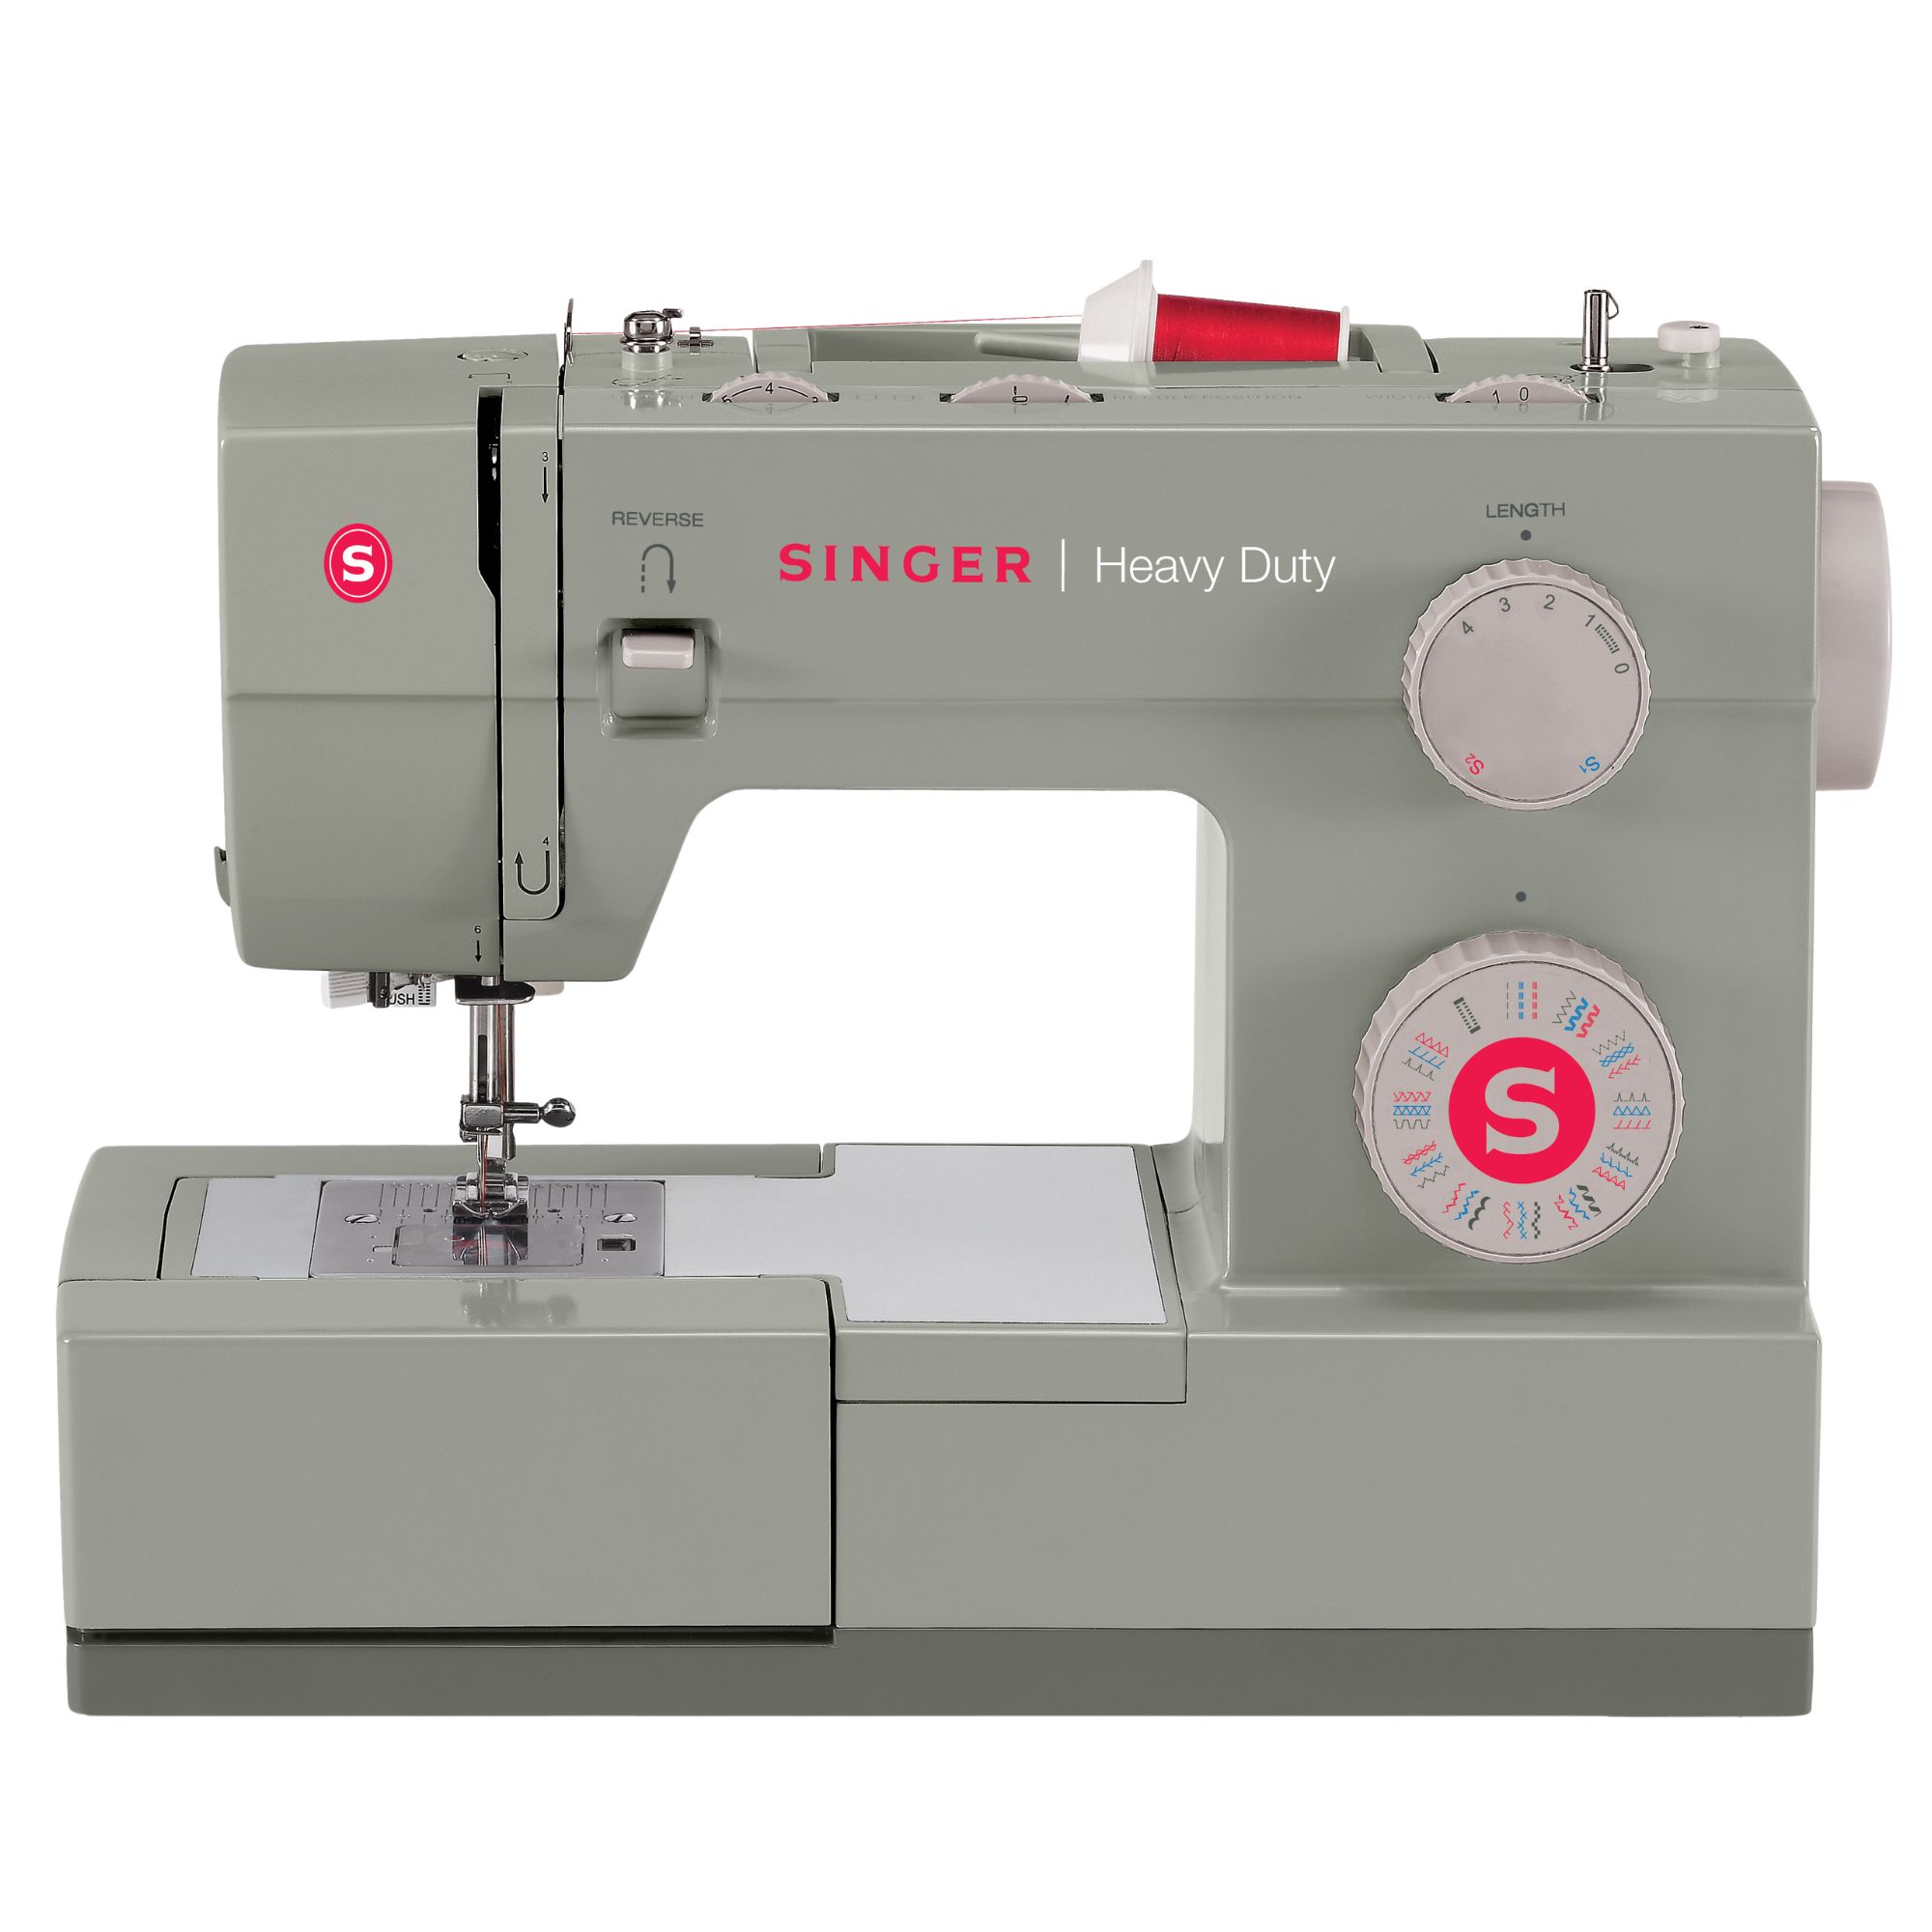 4452 heavy duty singer sewing machine